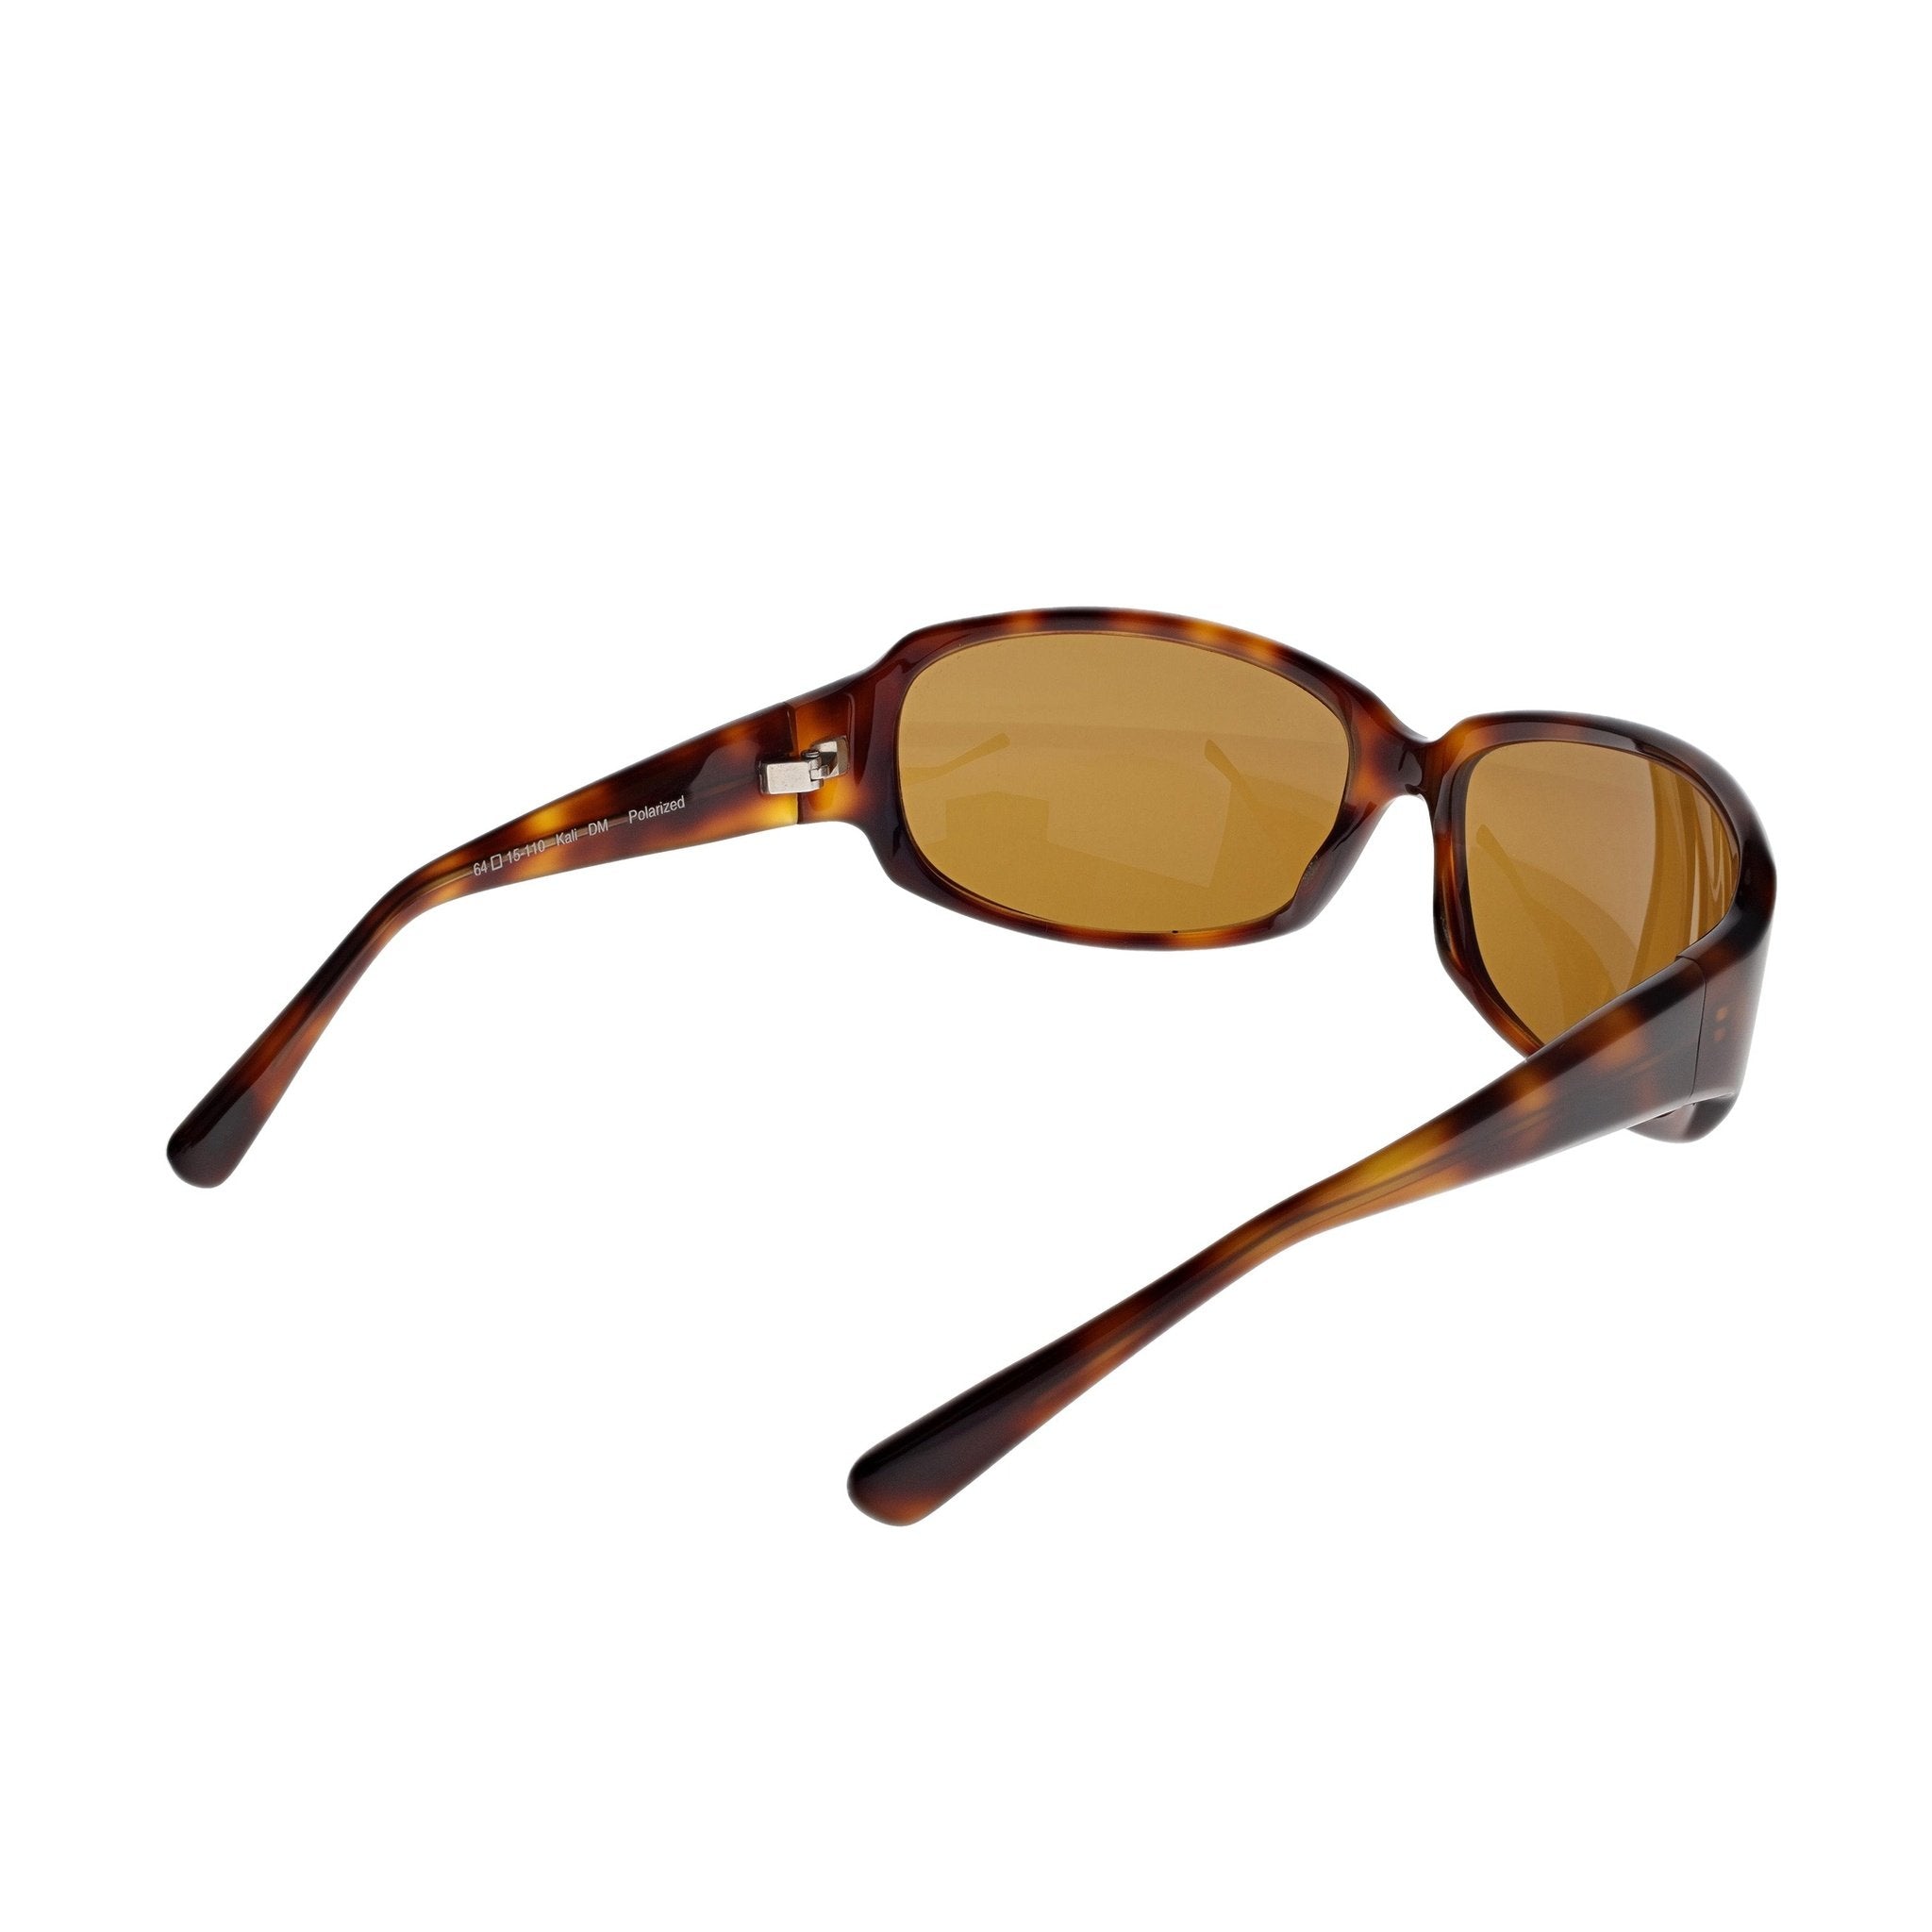 Oliver Peoples Kali Sunglasses - Brown